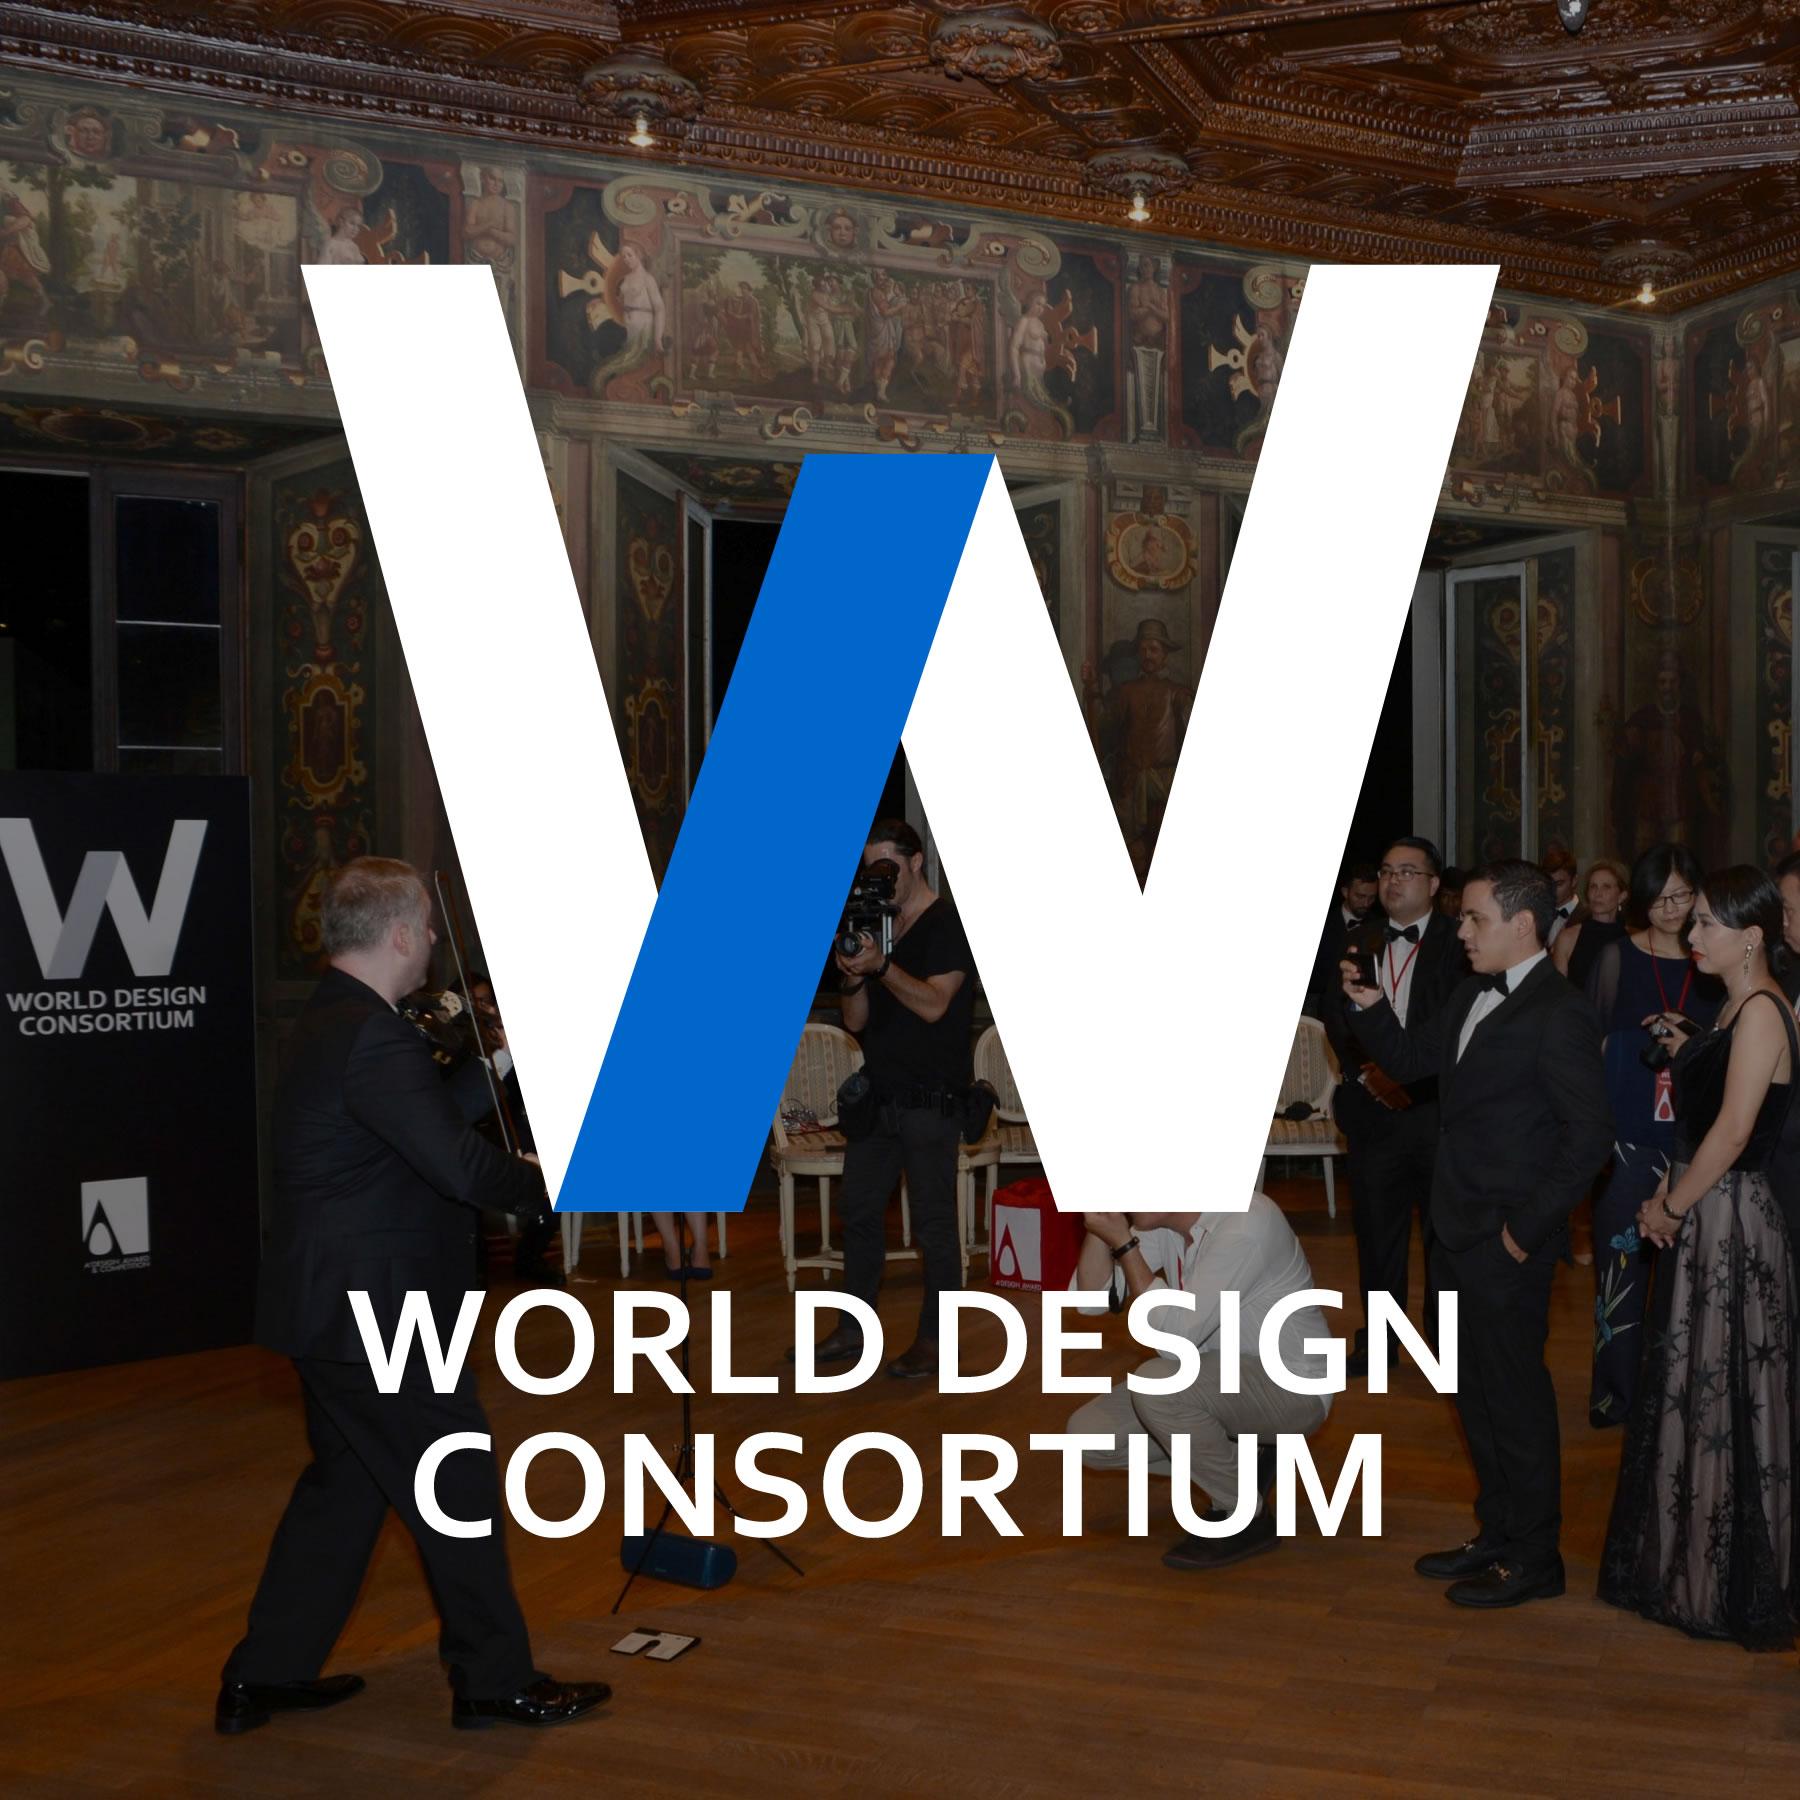 logo of the World Design Consortium overlay on event photo